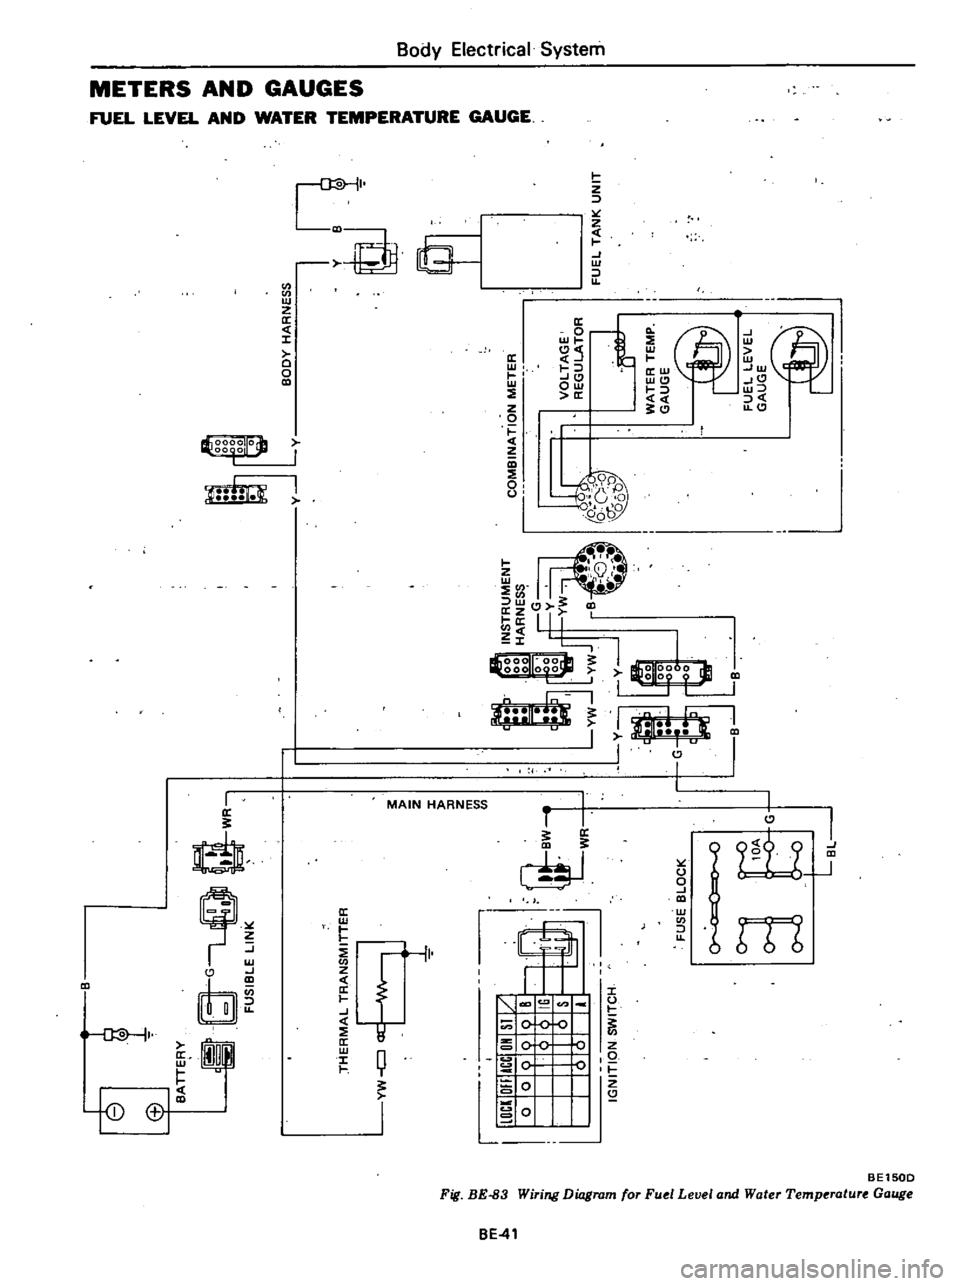 DATSUN 210 1979  Service Manual 
Body 
Electrical 
System

METERS 
AND 
GAUGES

FUEL 
LEVEL 
AND 
WATER 
TEMPERATURE 
GAUGE

riiOOOOIIO 
OO 
OI

J 
II

I

0

riJn

C 
J

1 
1

ffi

QM

fD

01 
II 
z

z

J

W

u
Q

lb

en

en

w

Z

